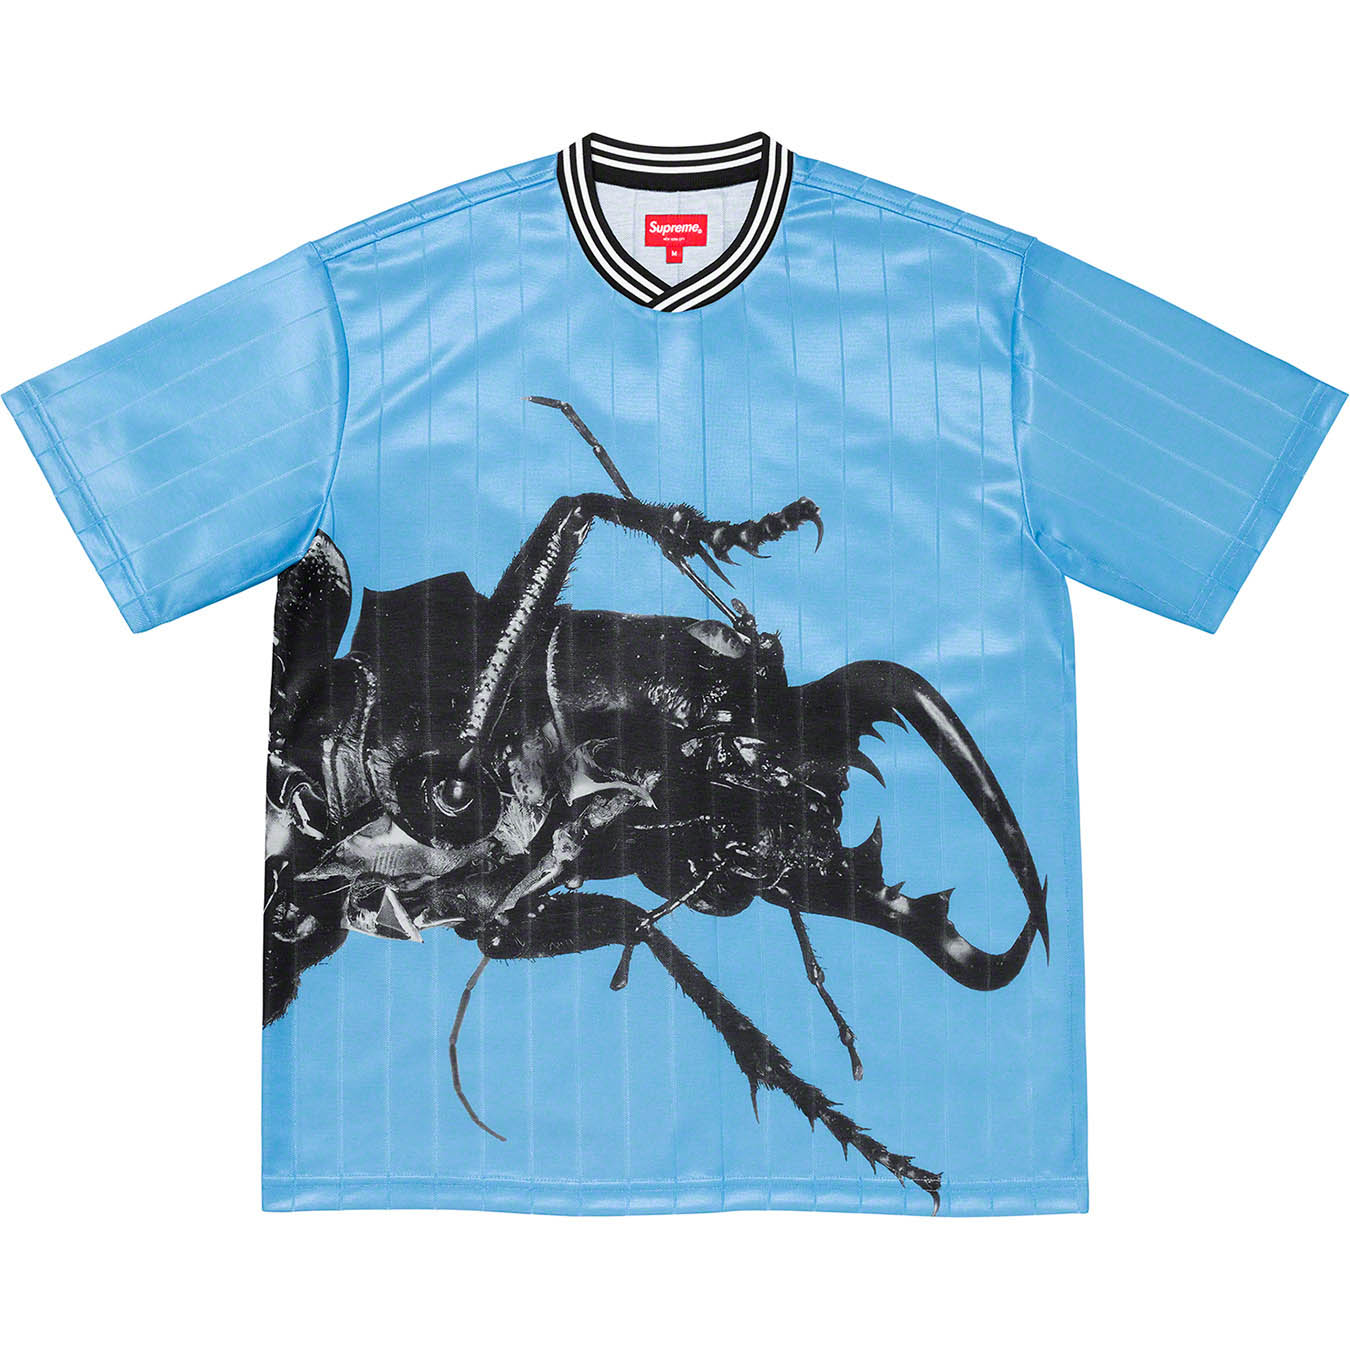 Beetle Soccer Top | Supreme 21ss